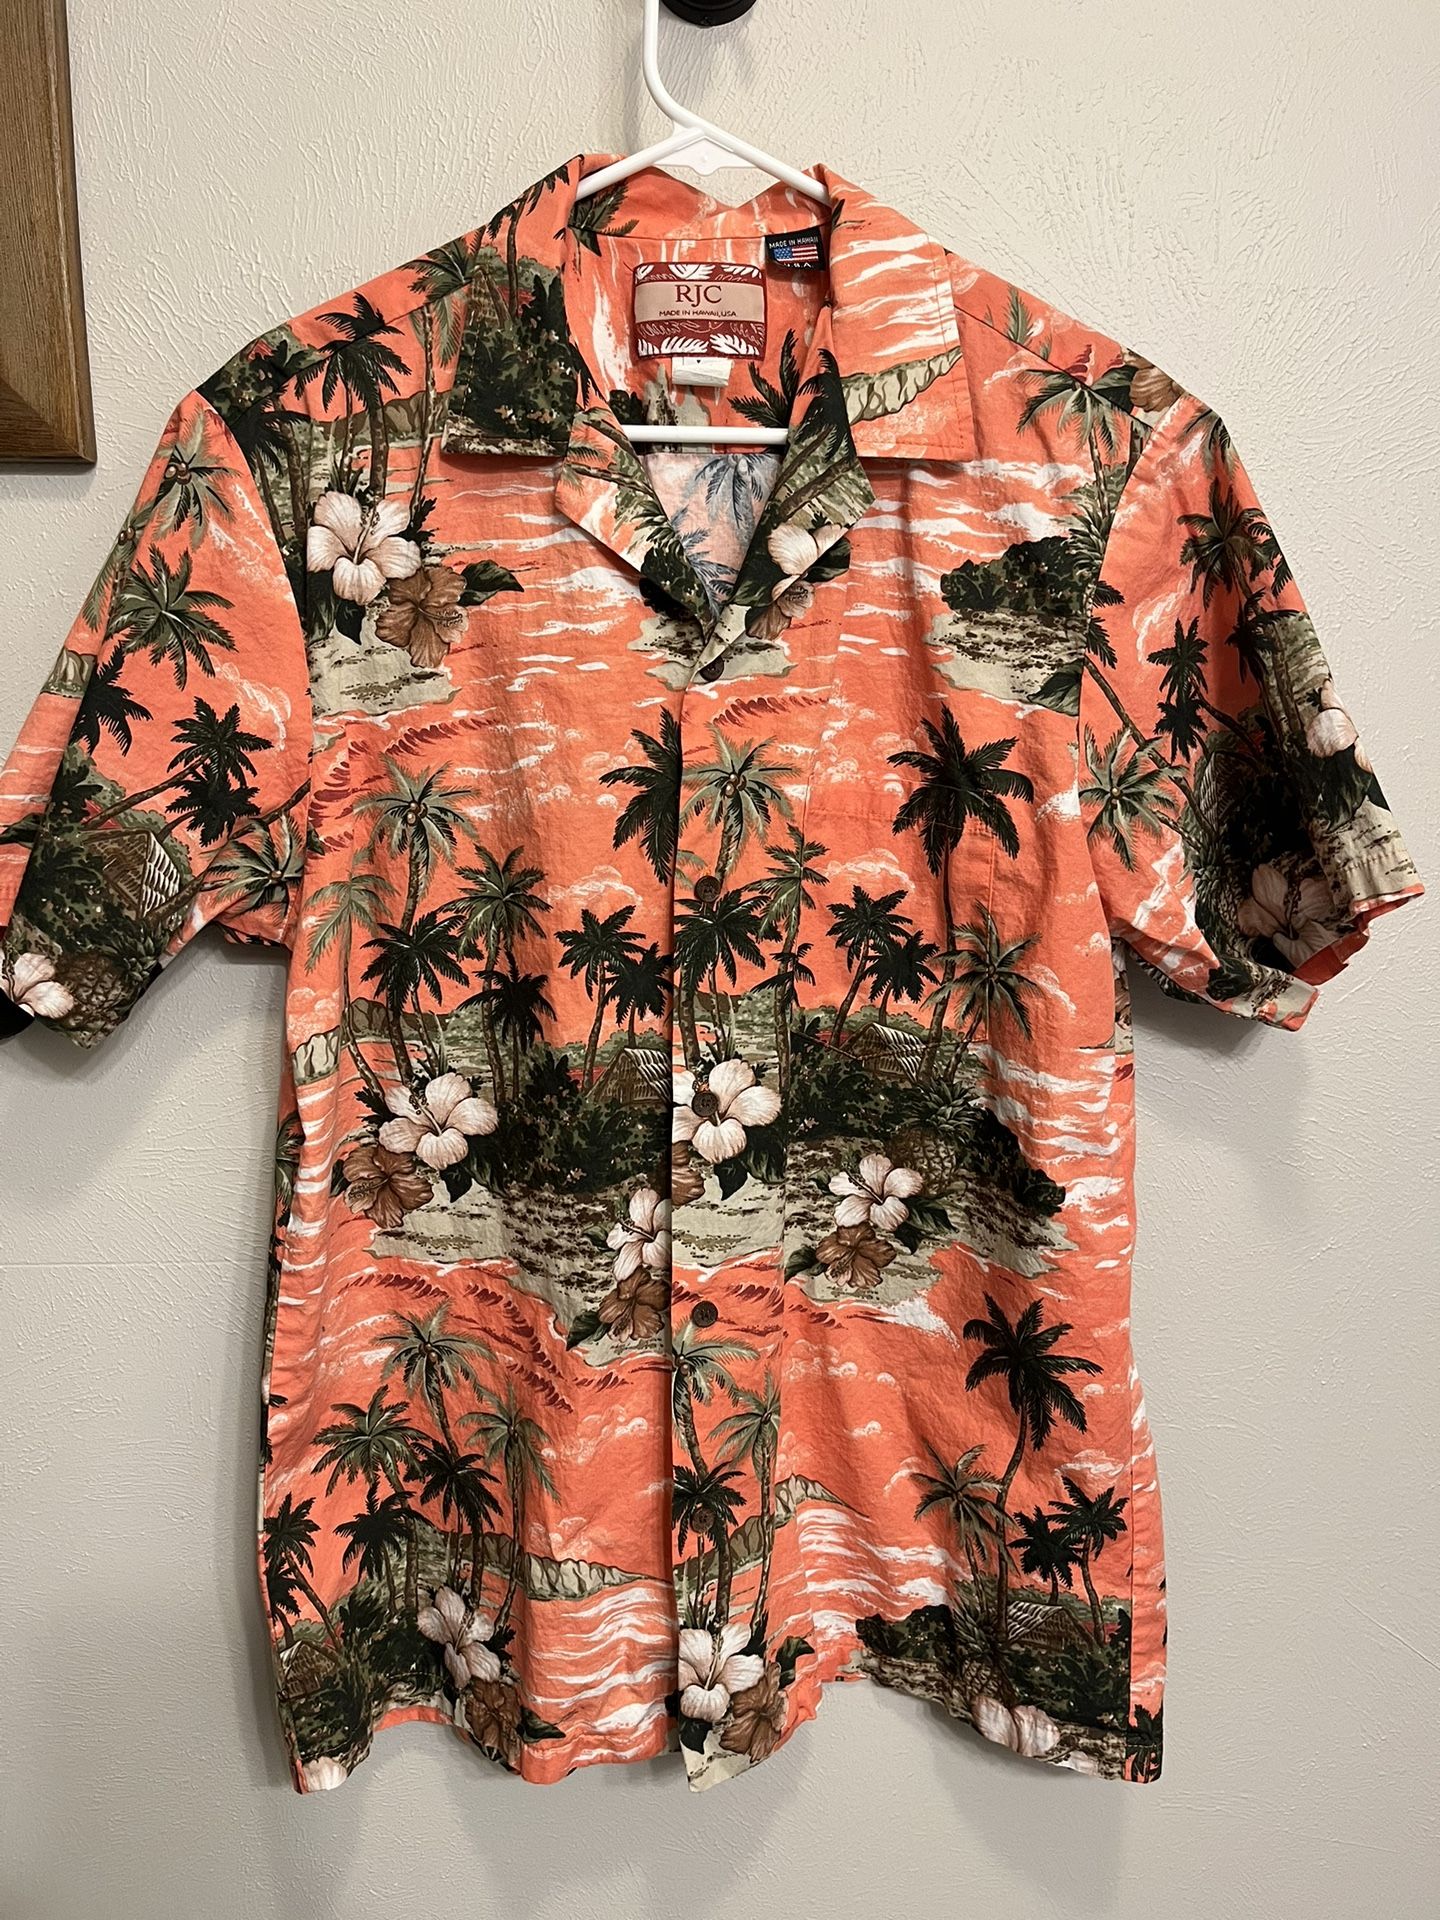 RJC Men’s Hawaiian Shirt Made In USA Size L